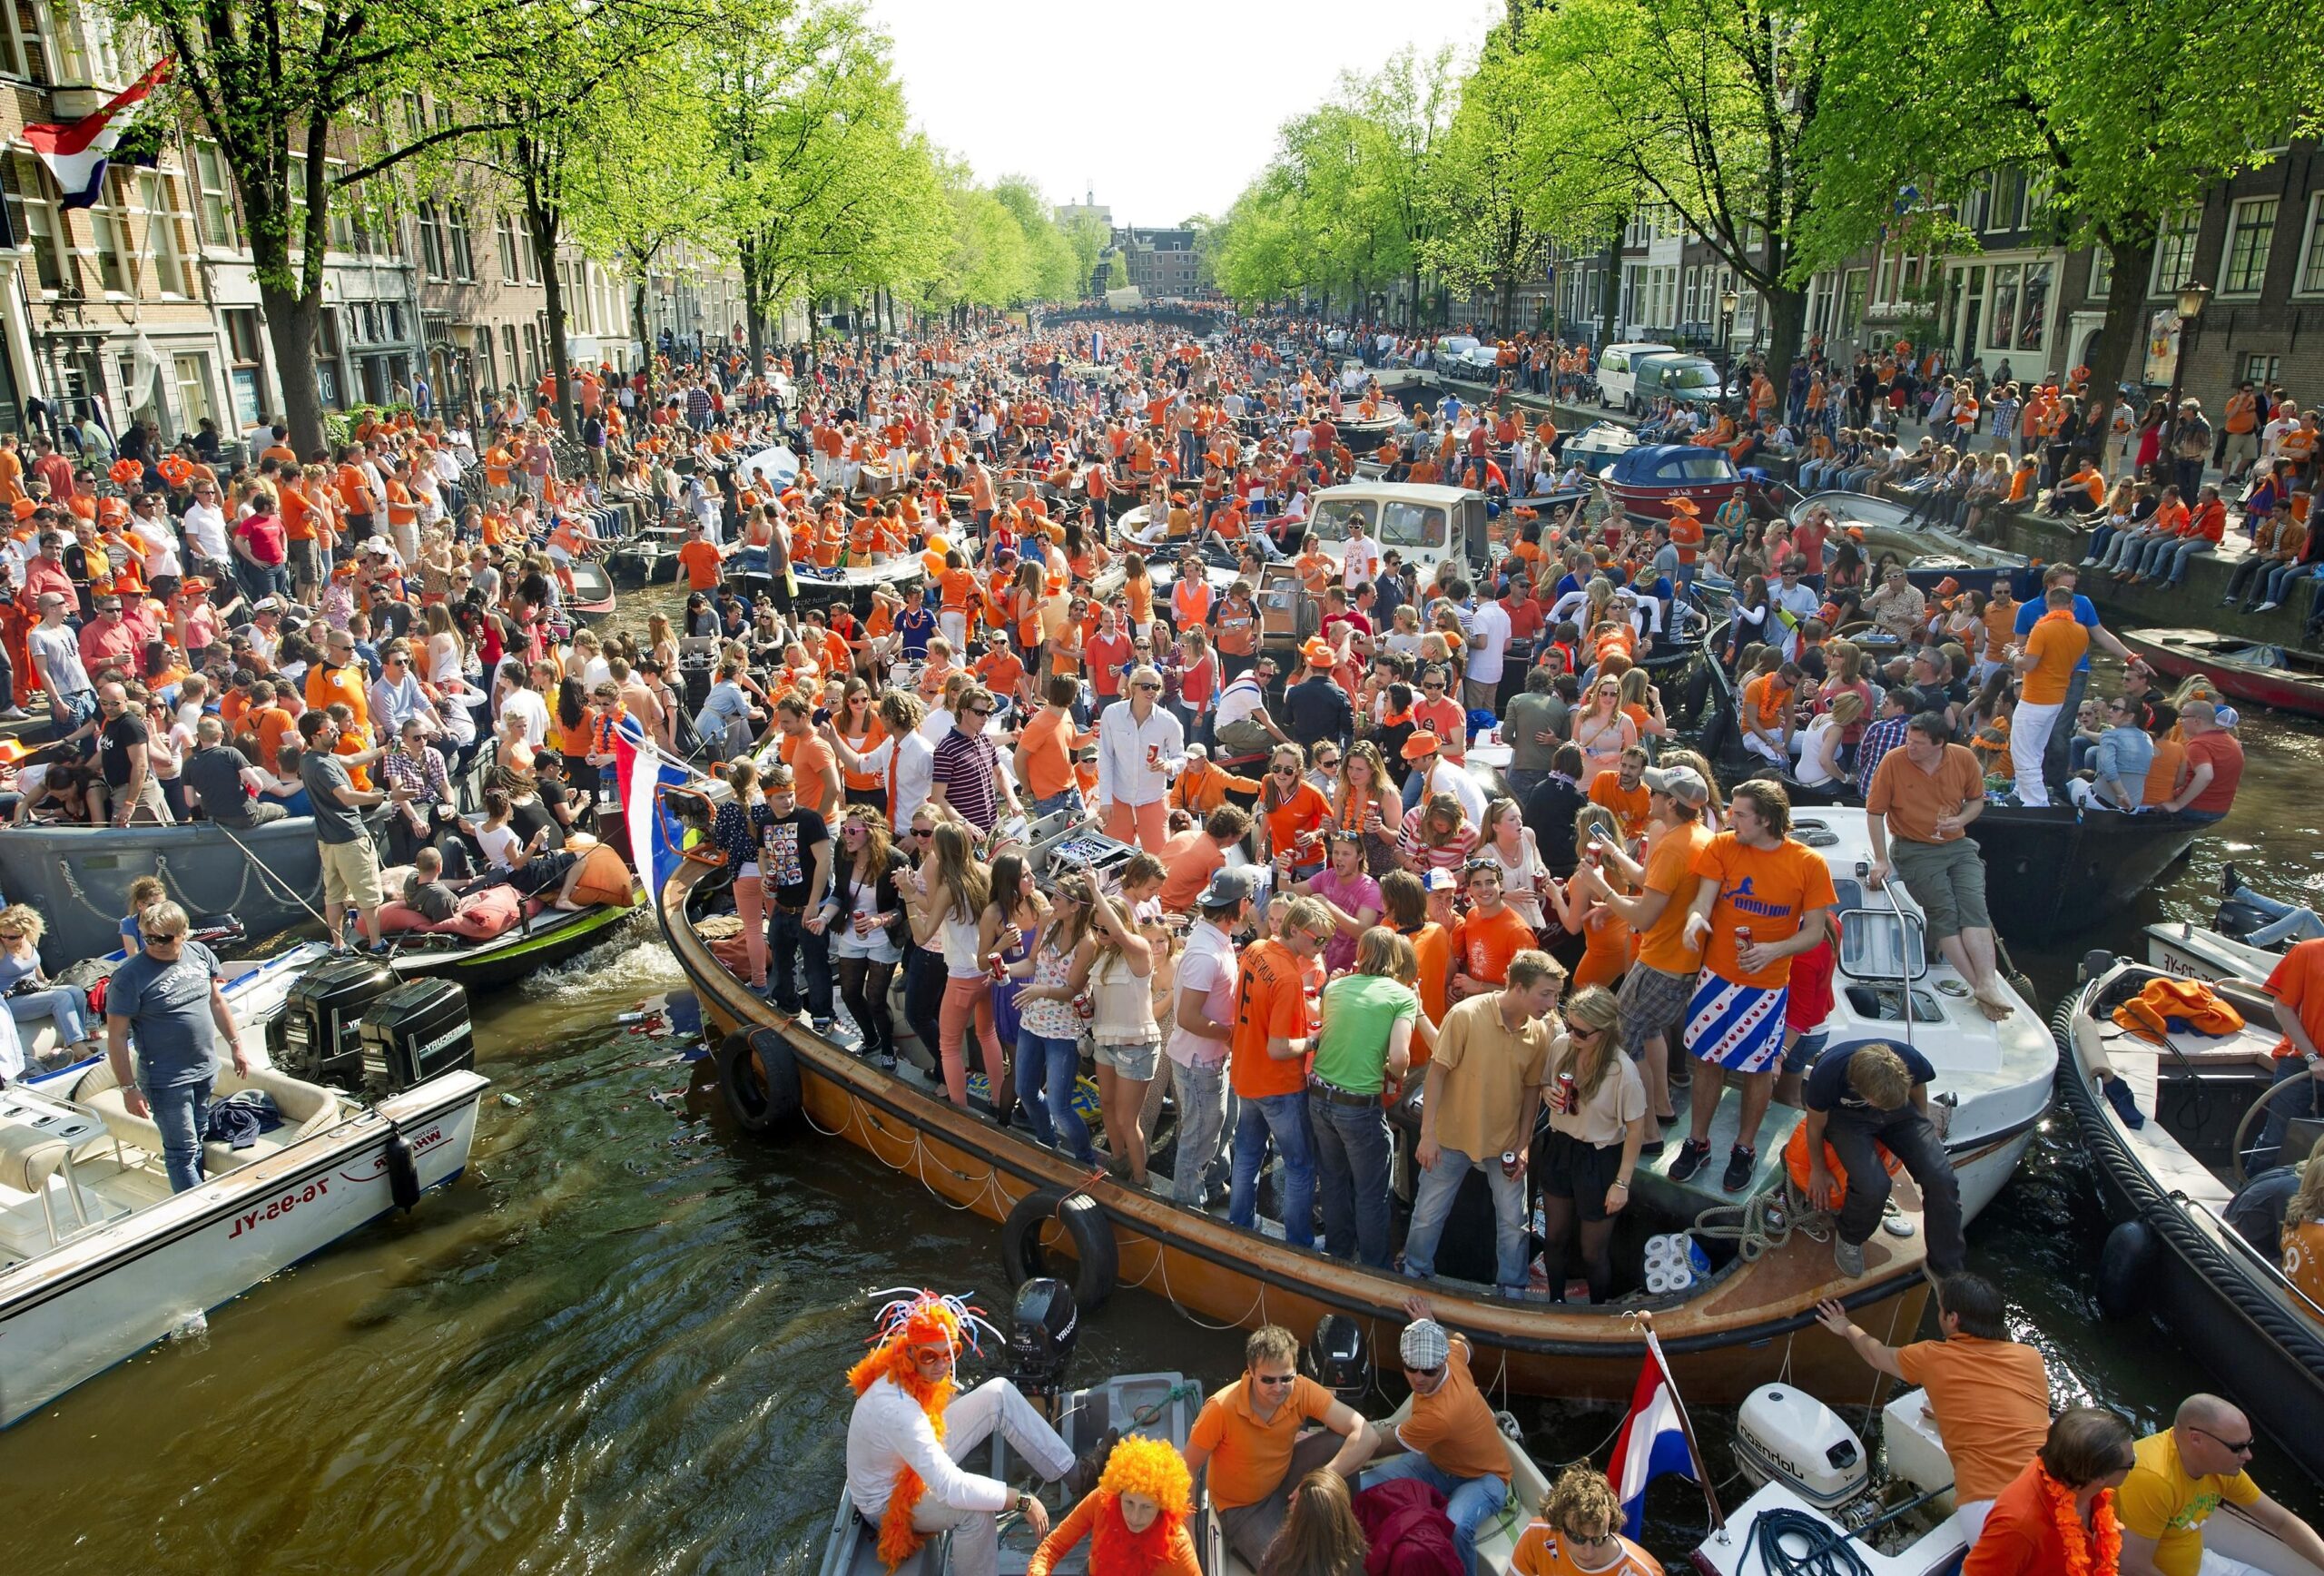 BEATBRDG Music Industry Internships - Celebrating Kings Day in Amsterdam